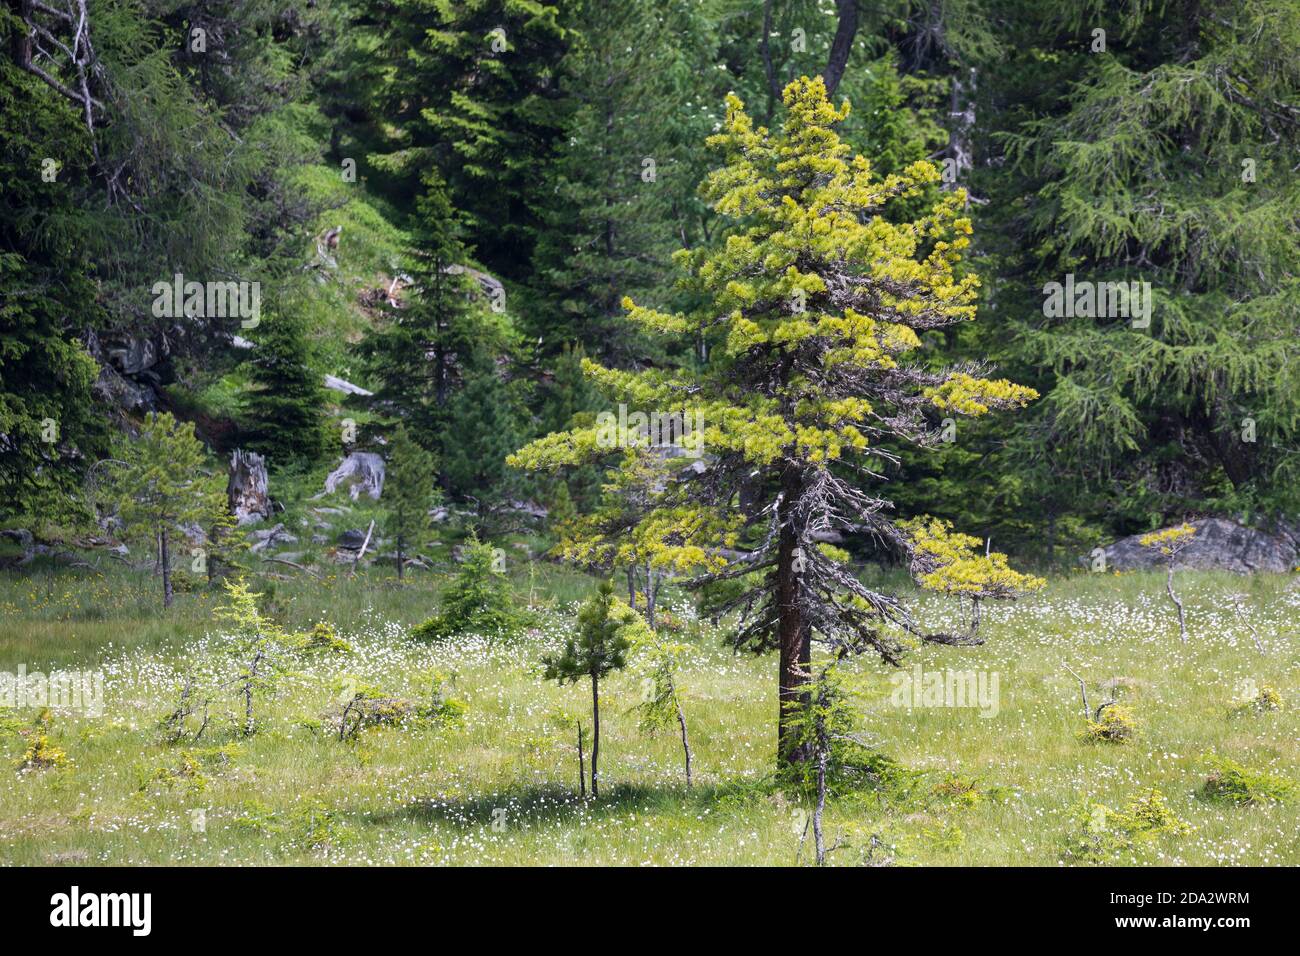 Swiss stone pine, arolla pine (Pinus cembra), habit, Austria Stock Photo